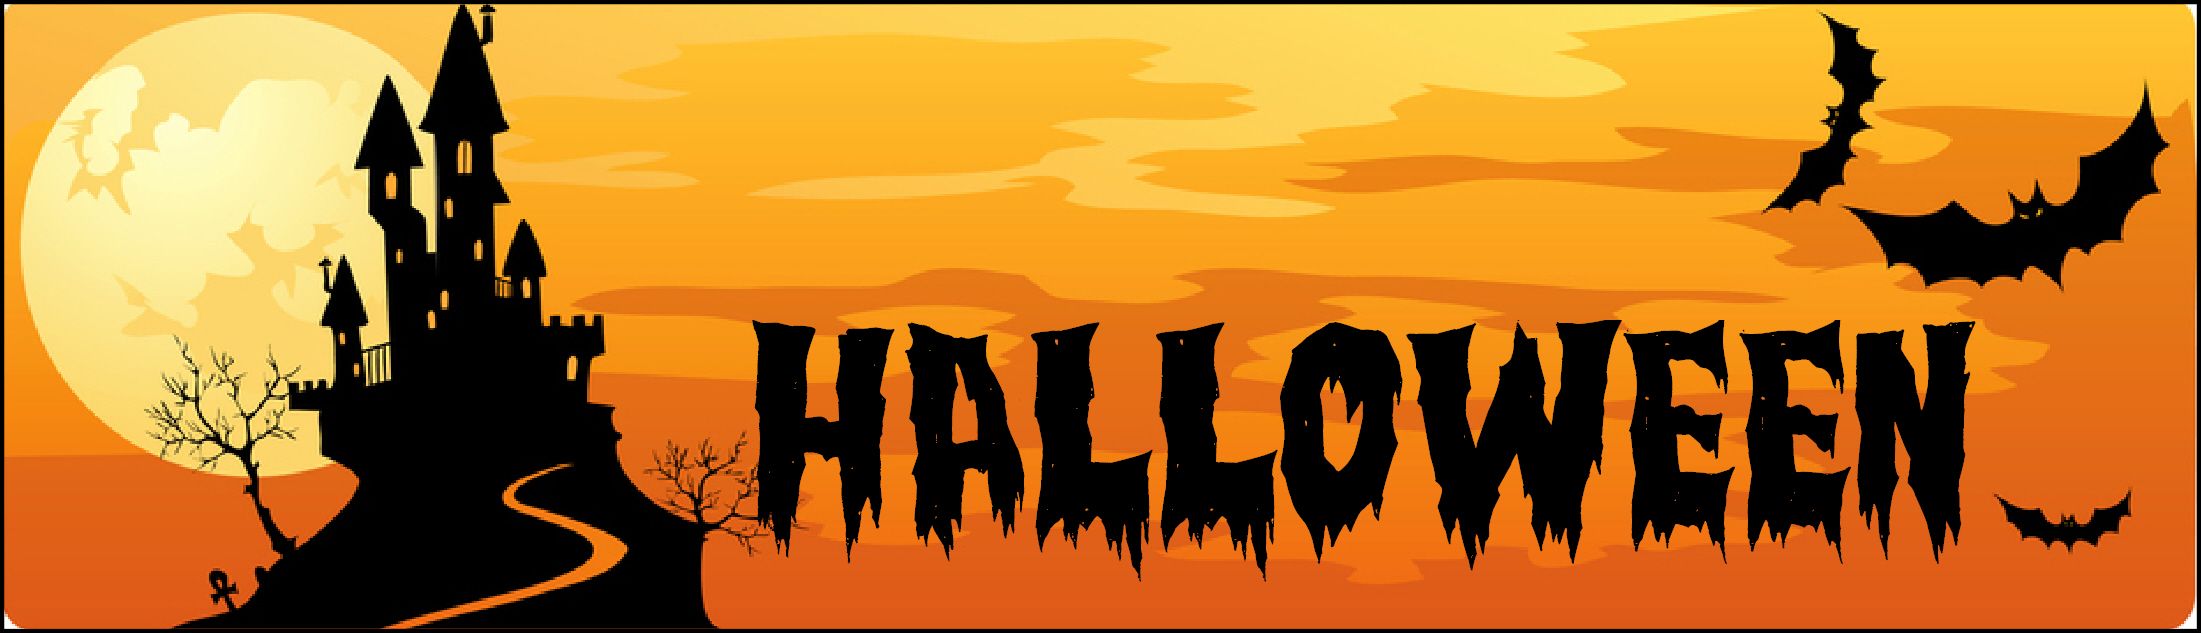 halloween-banner.jpg - 138,03 kB